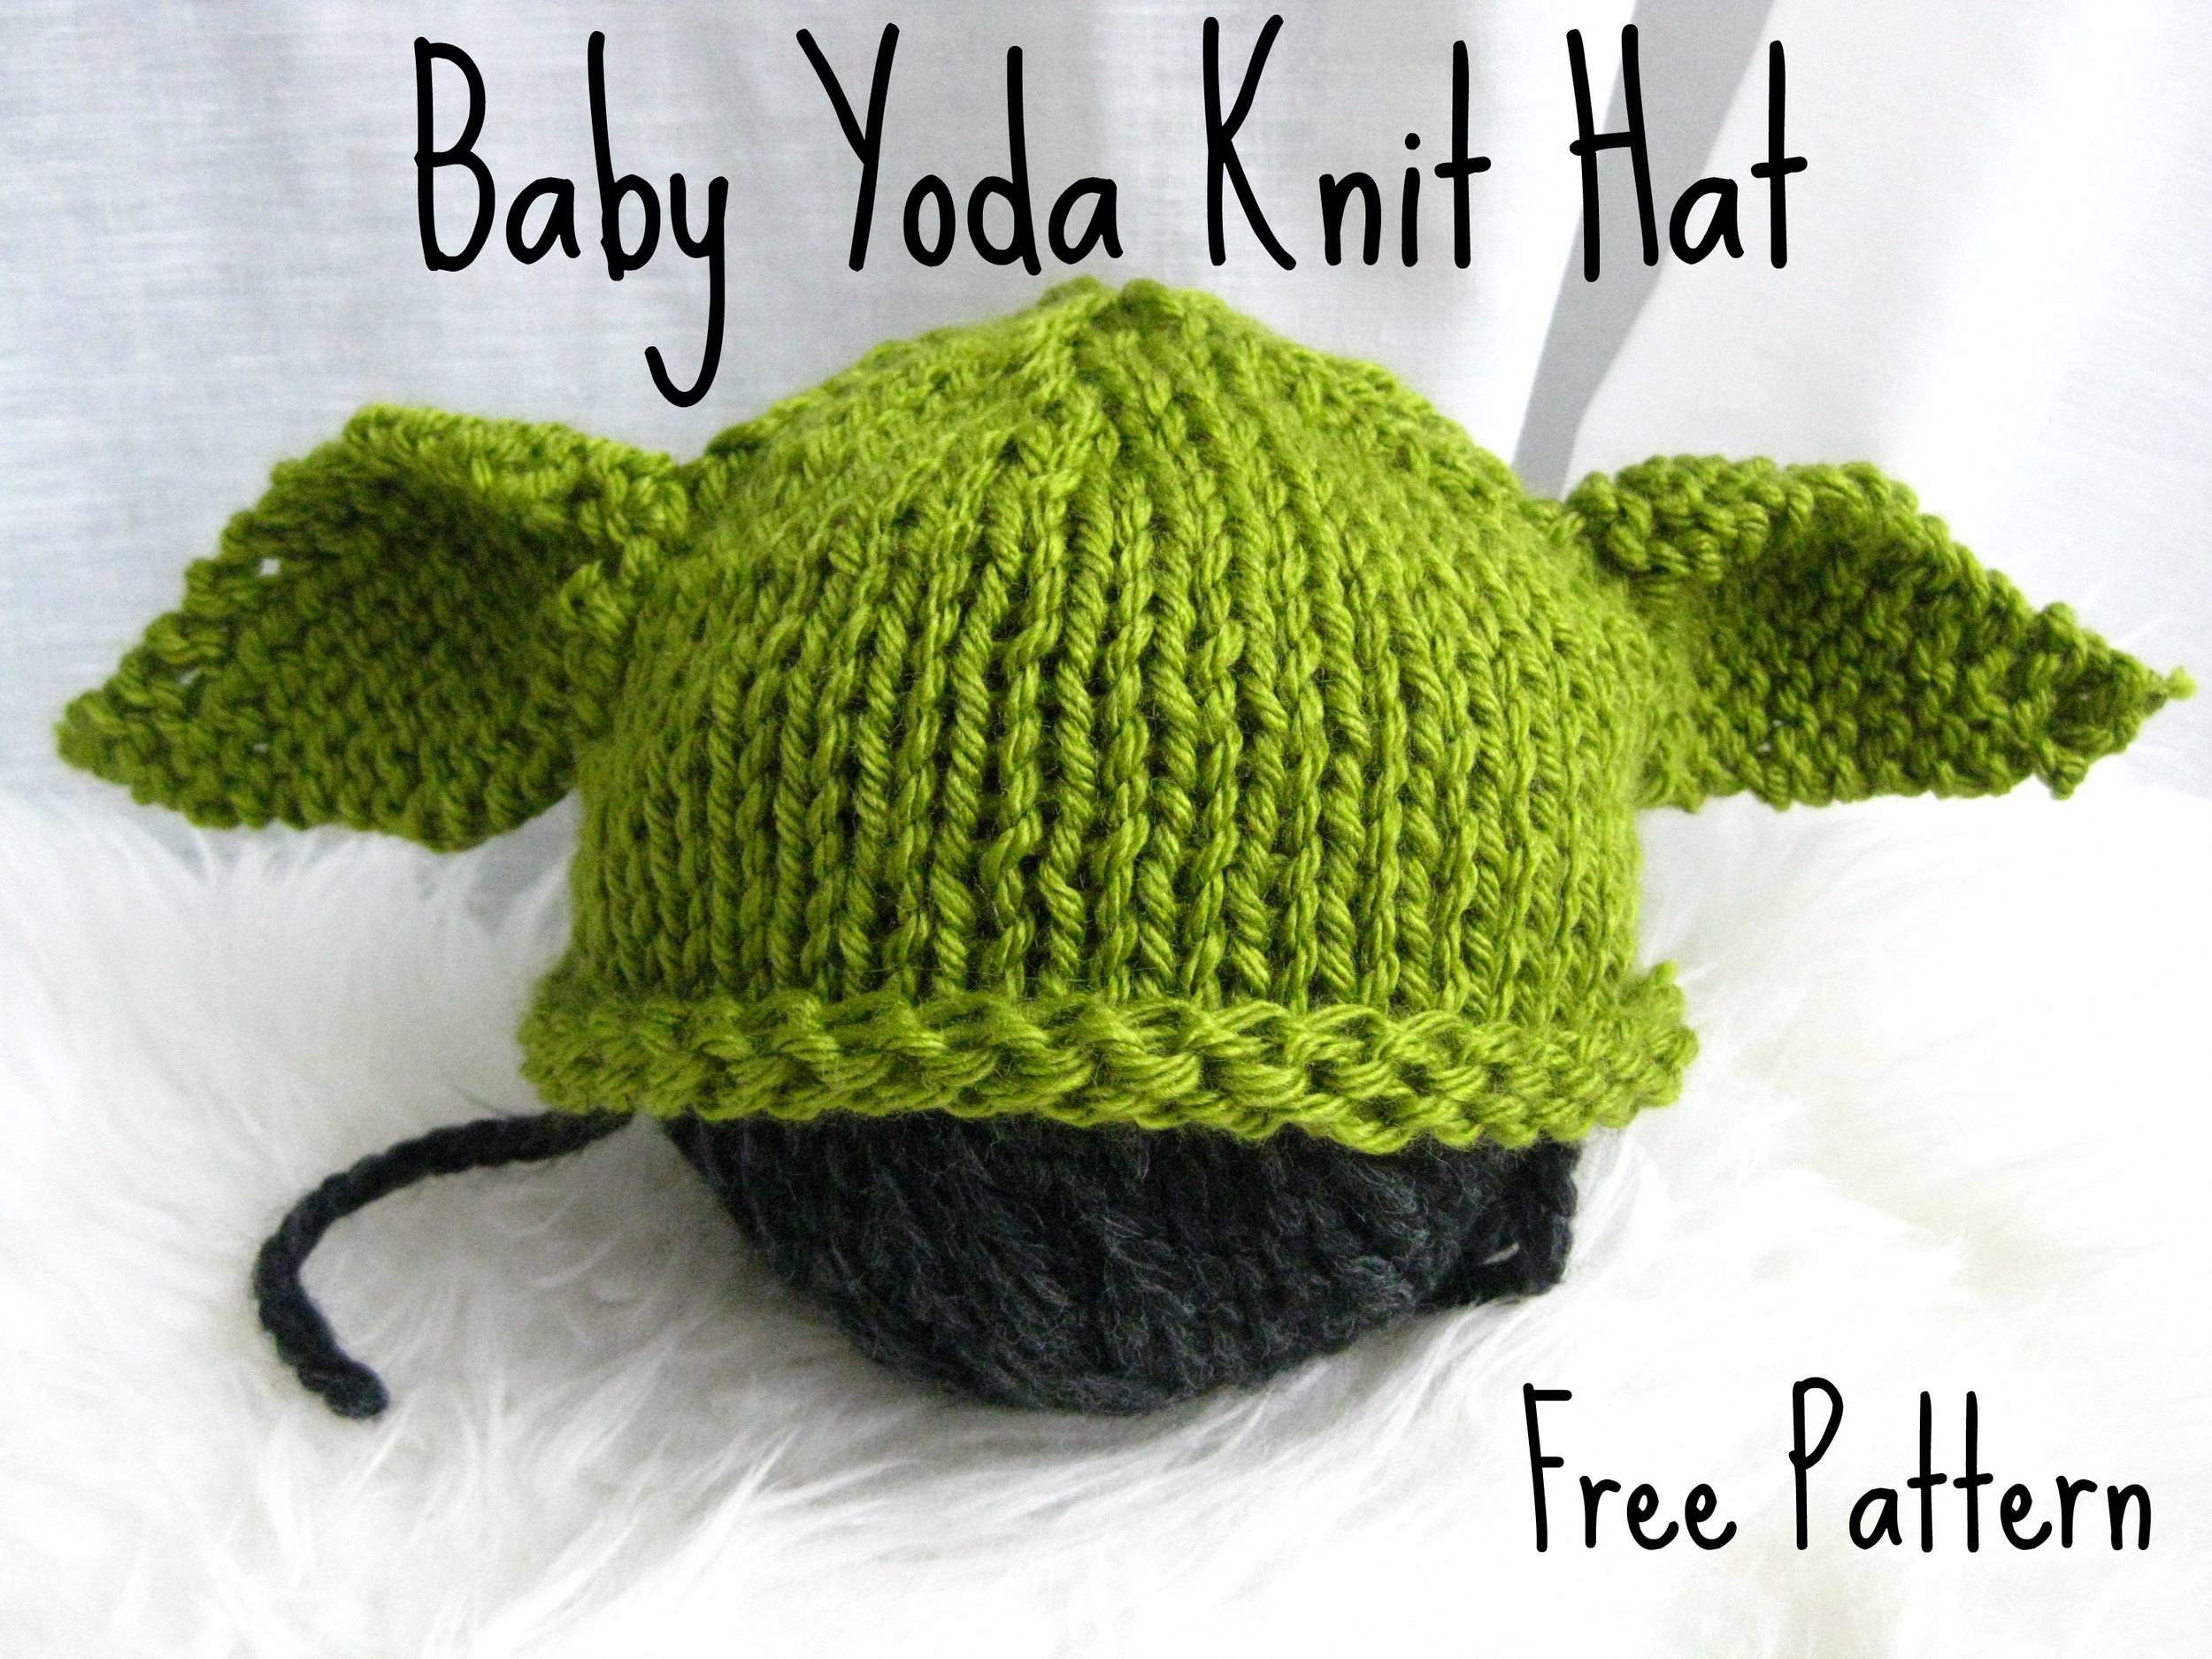 Baby Yoda Knit Hat (with Free Pattern) — Shinah Chang